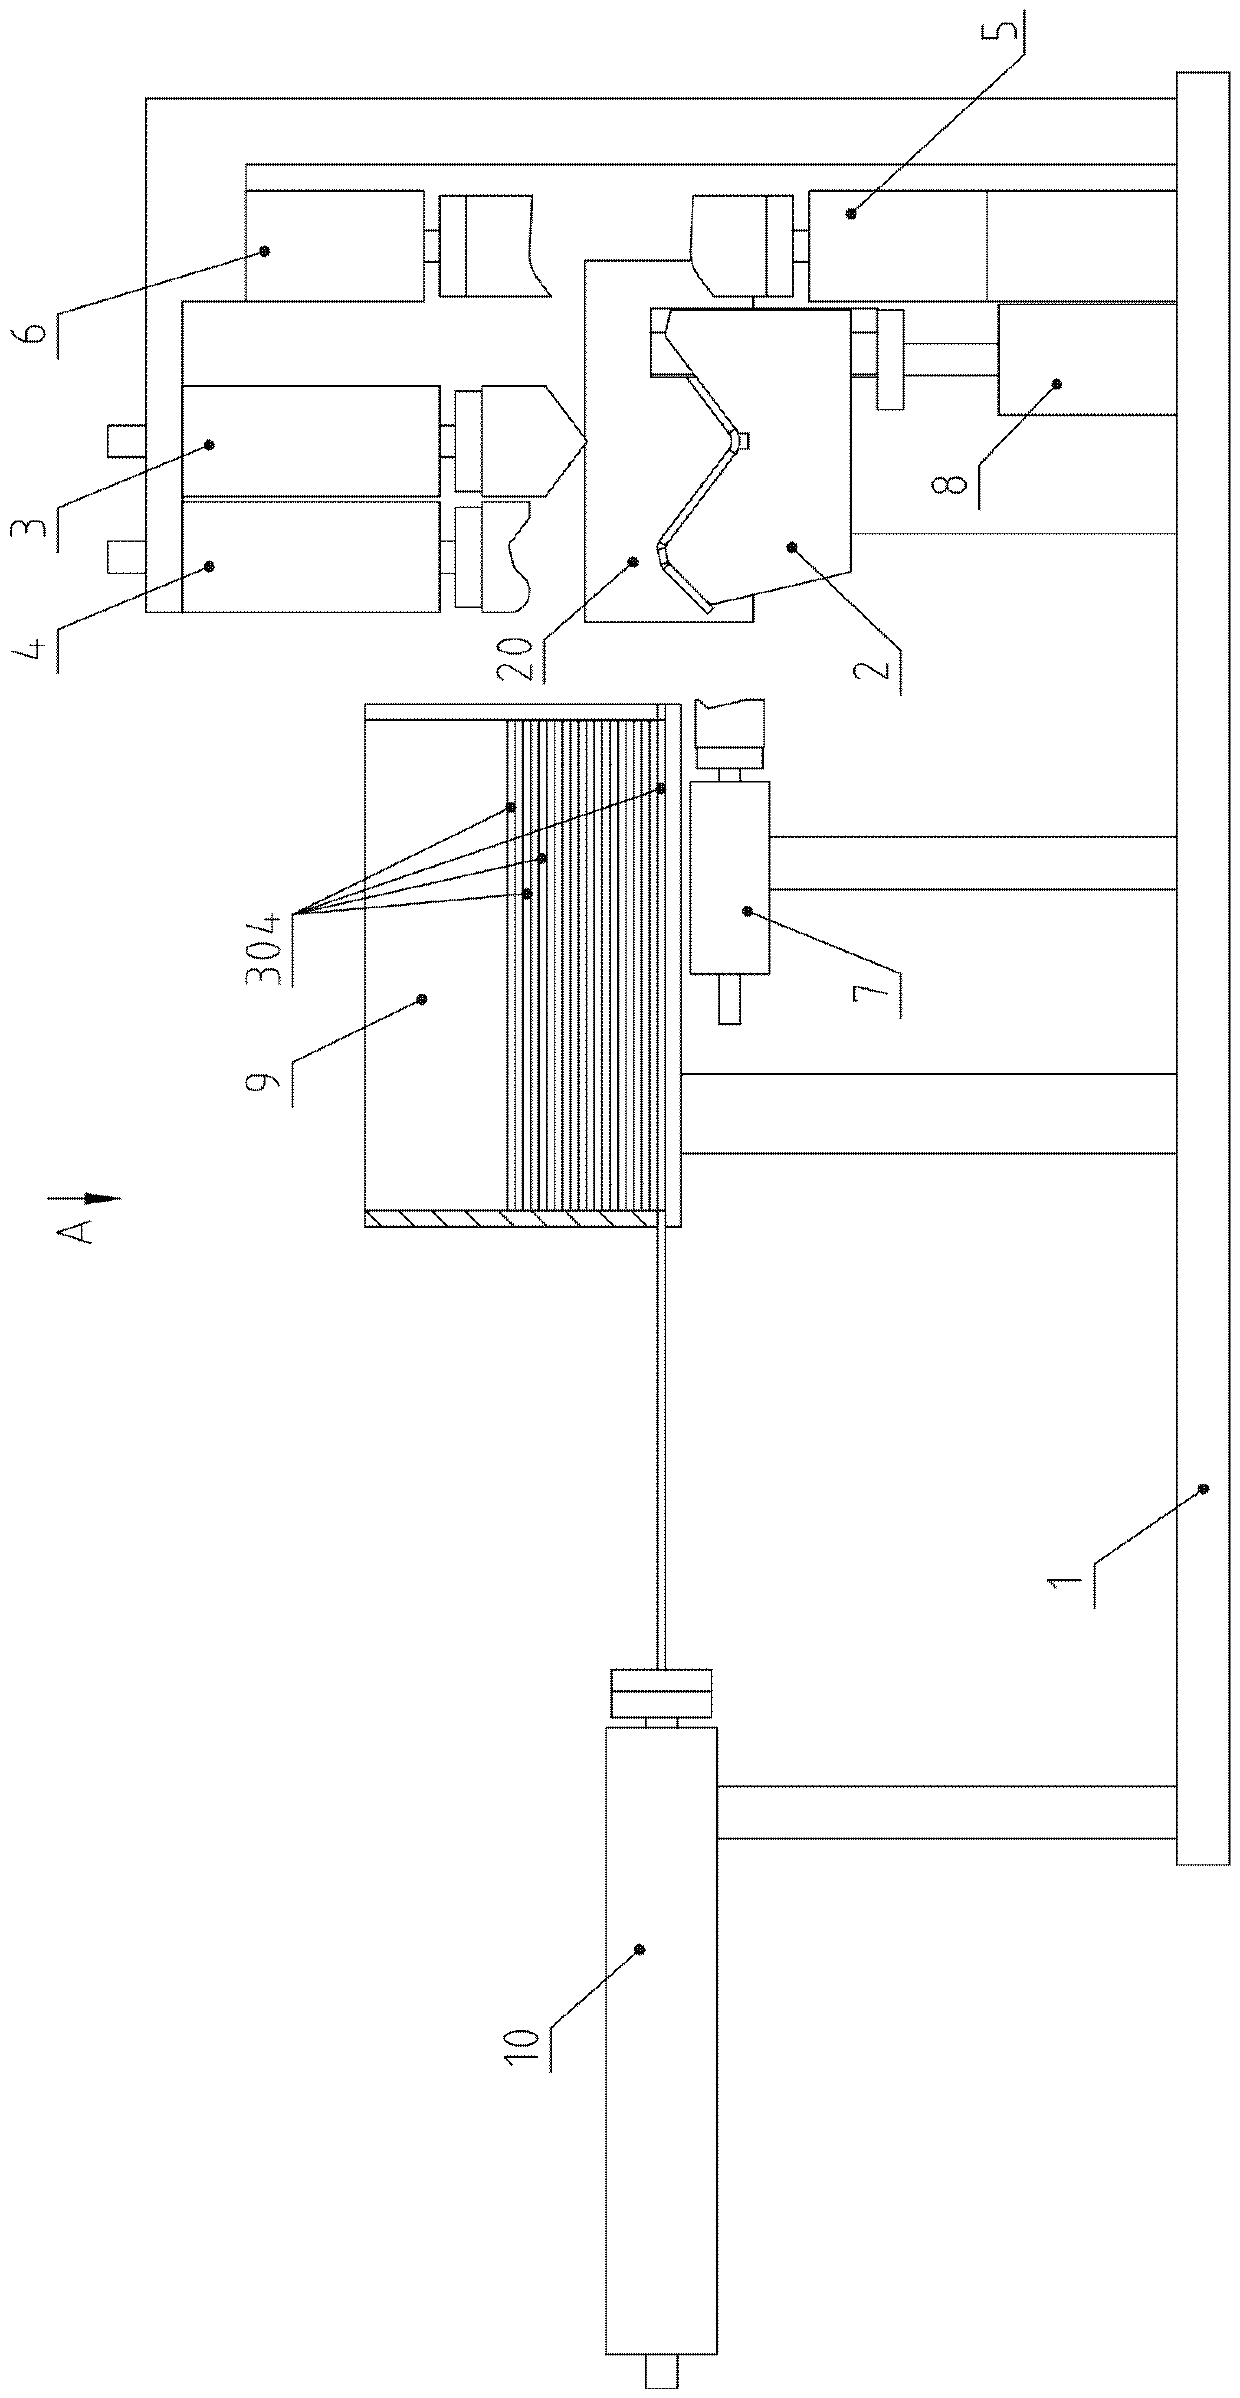 Automatic production device of turnover sliding shifting board used on medical gauze textile machine